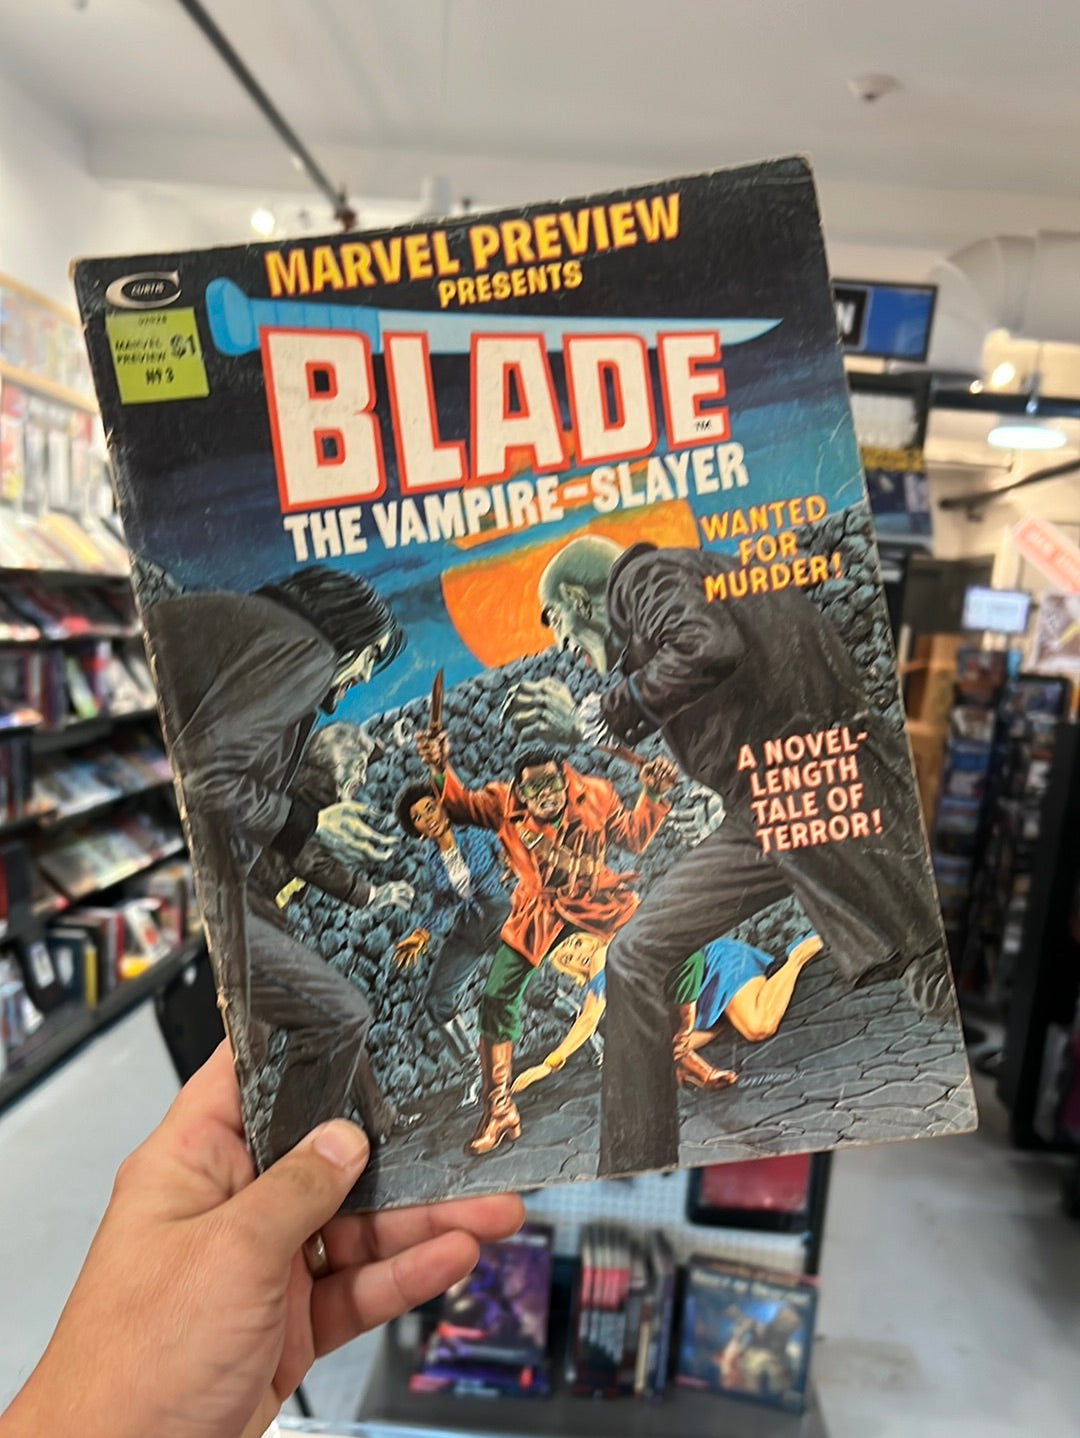 Marvel Preview Magazine #3 (Blade)